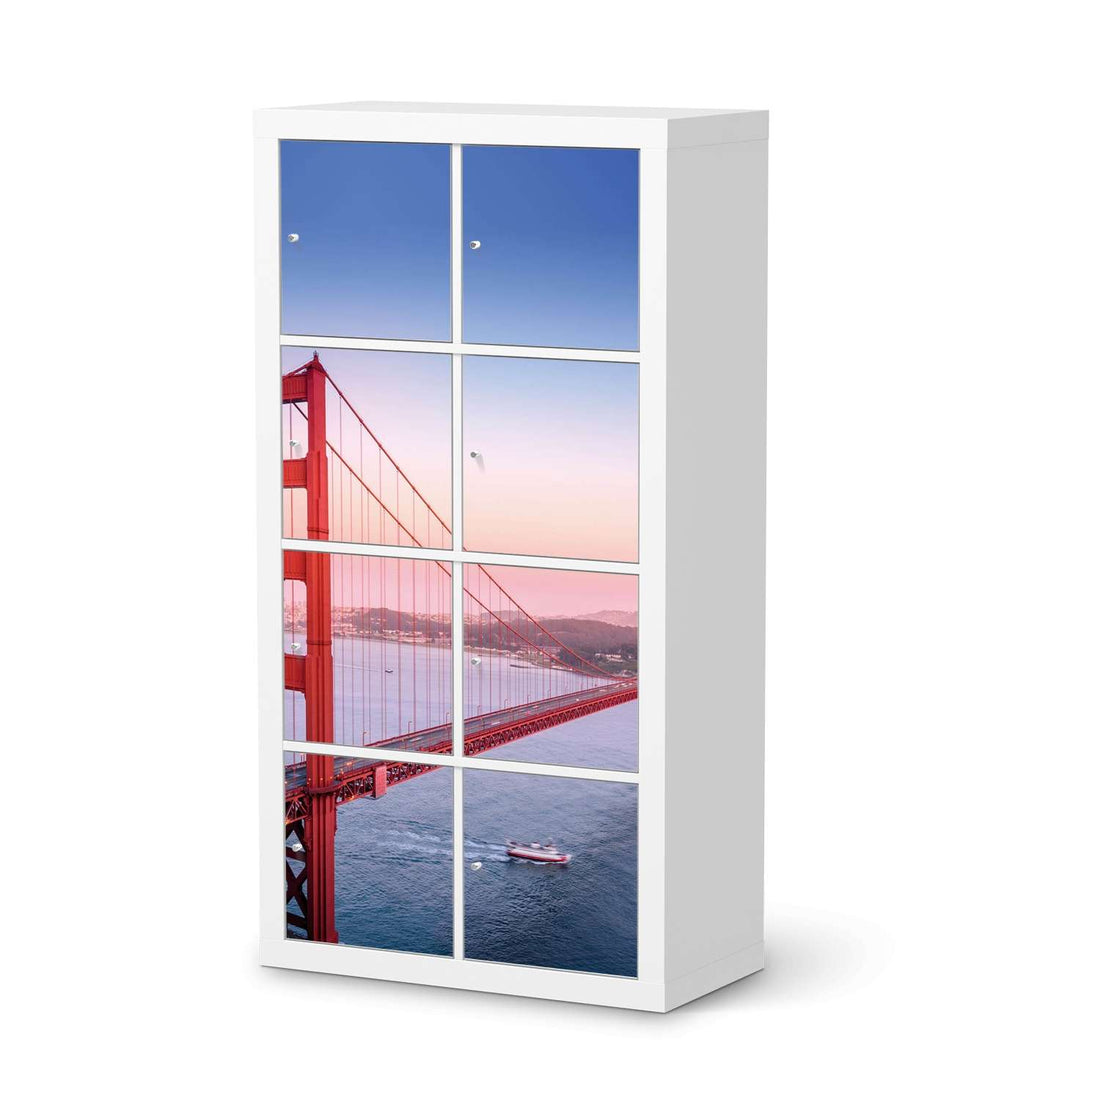 Folie für Möbel Golden Gate - IKEA Kallax Regal 8 Türen  - weiss